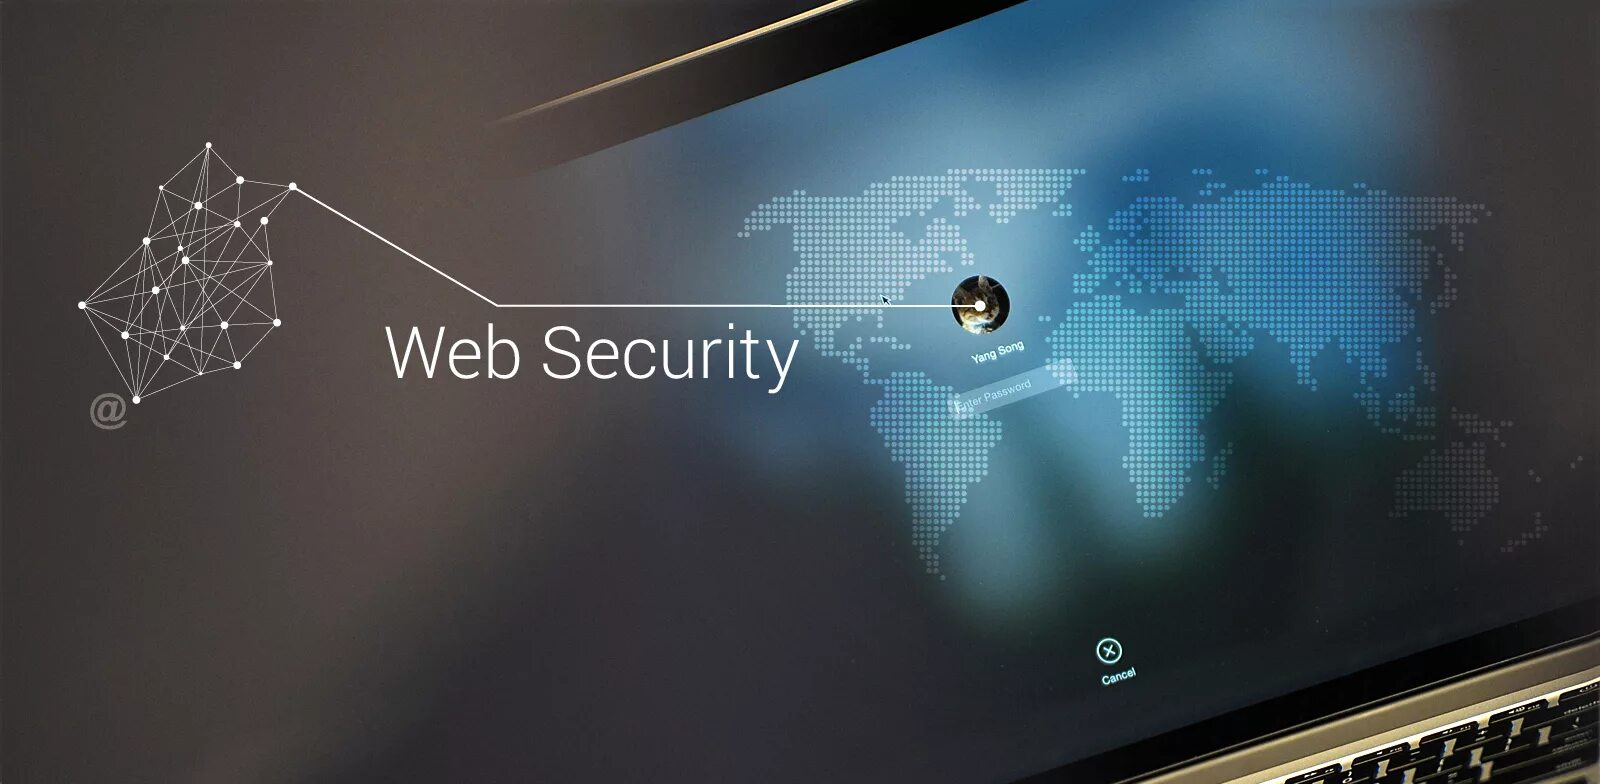 Web security. Web безопасность. Защита веб приложений. Веб угрозы. Безопасность веб сайтов.